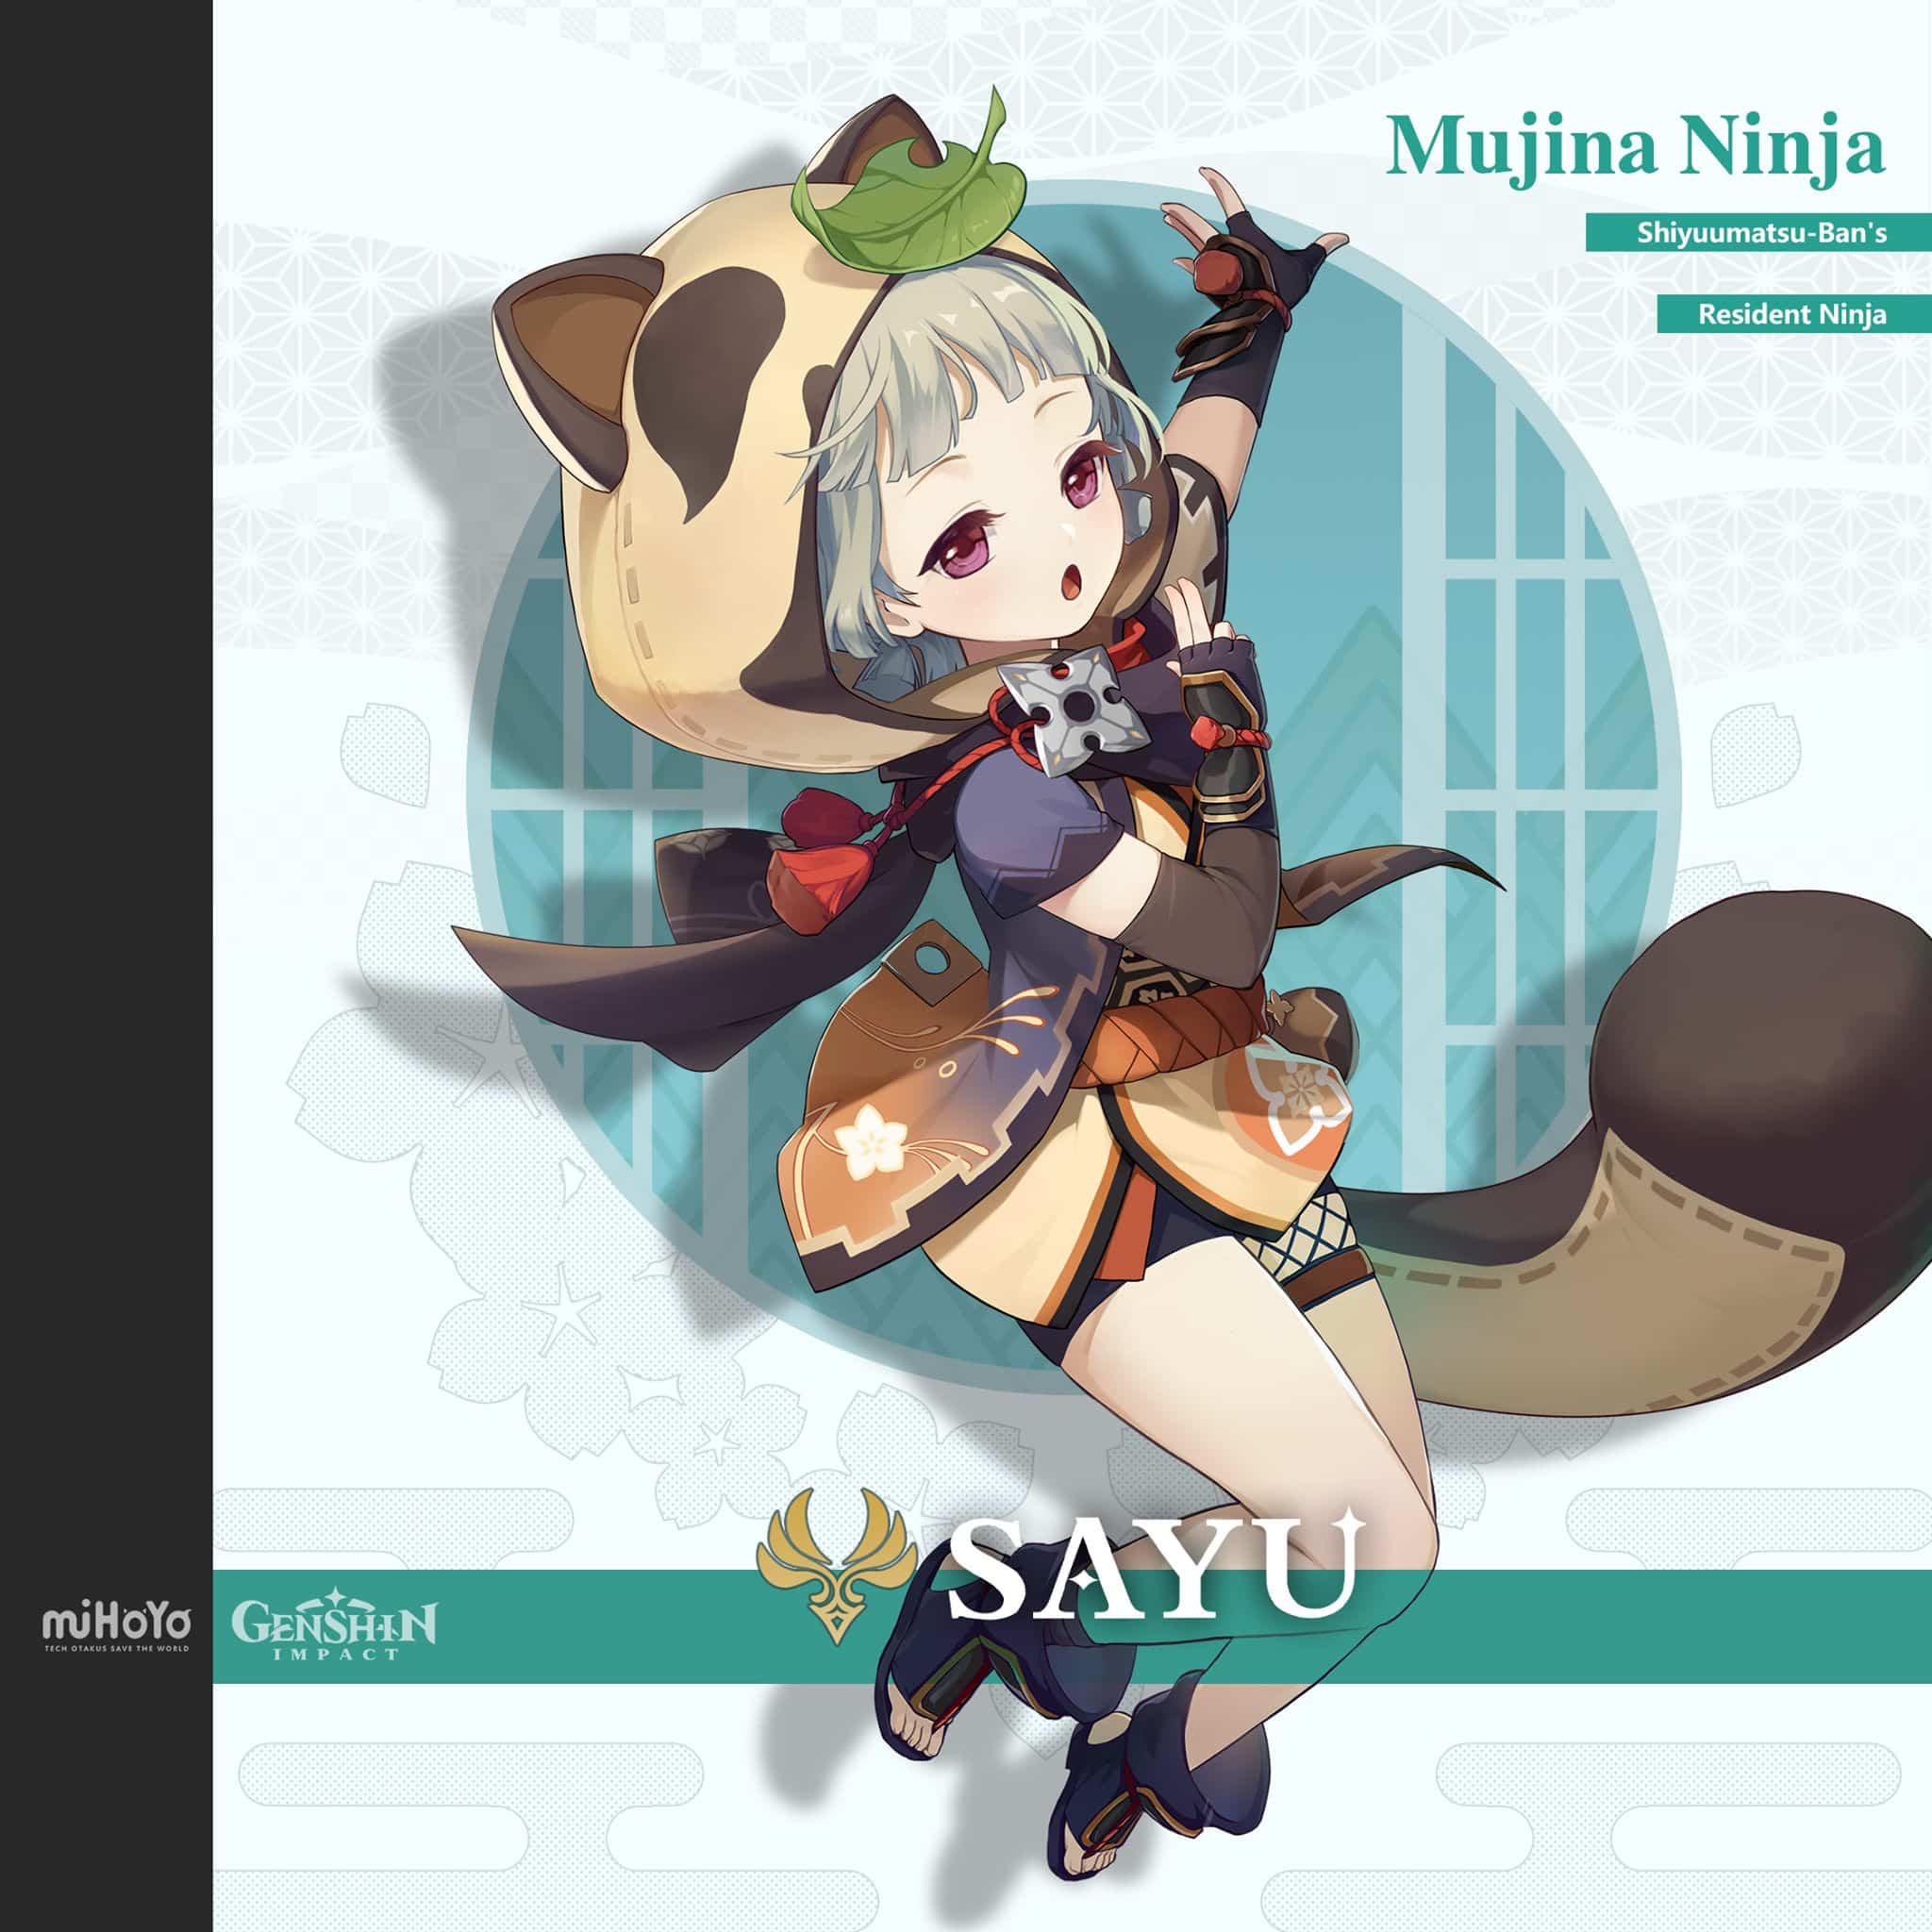 Mihoyo confirma personagens de inazuma em genshin impact | 425538e2 saya | genshin impact, ios, mihoyo, multiplayer, pc, personagens, playstation 4, singleplayer | personagens de inazuma notícias